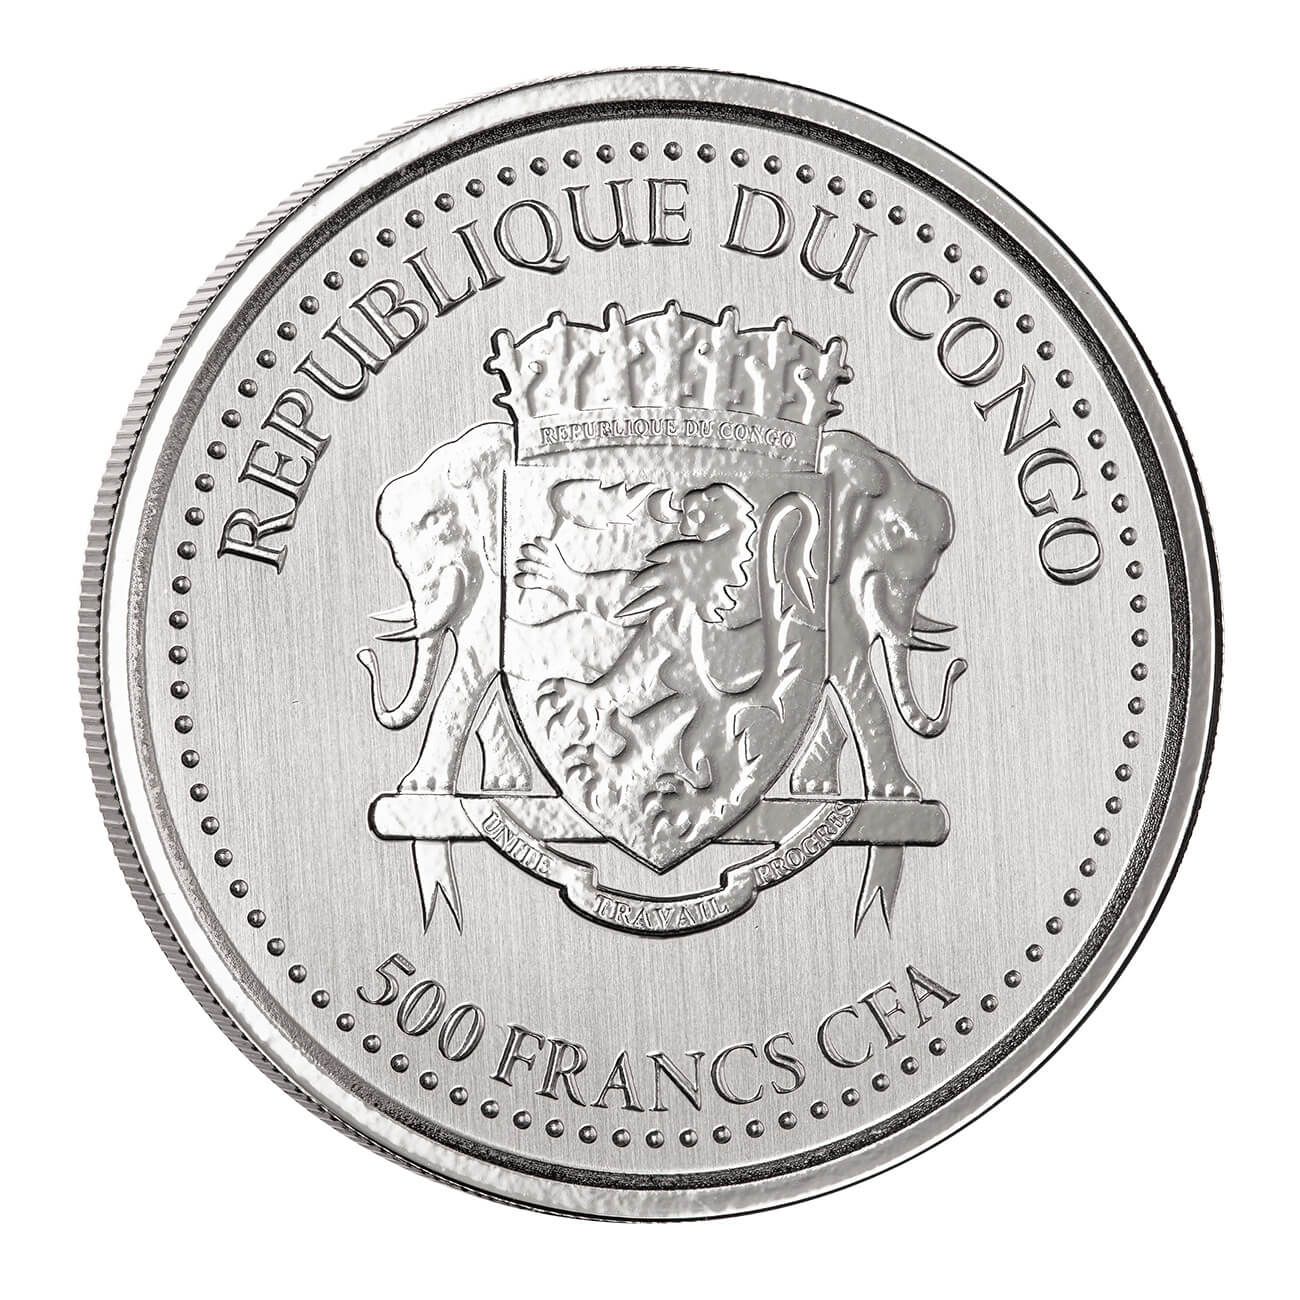 2022 Congo Silverback Gorilla 1 Oz Silver Bu Coin Scottsdale Mint 02